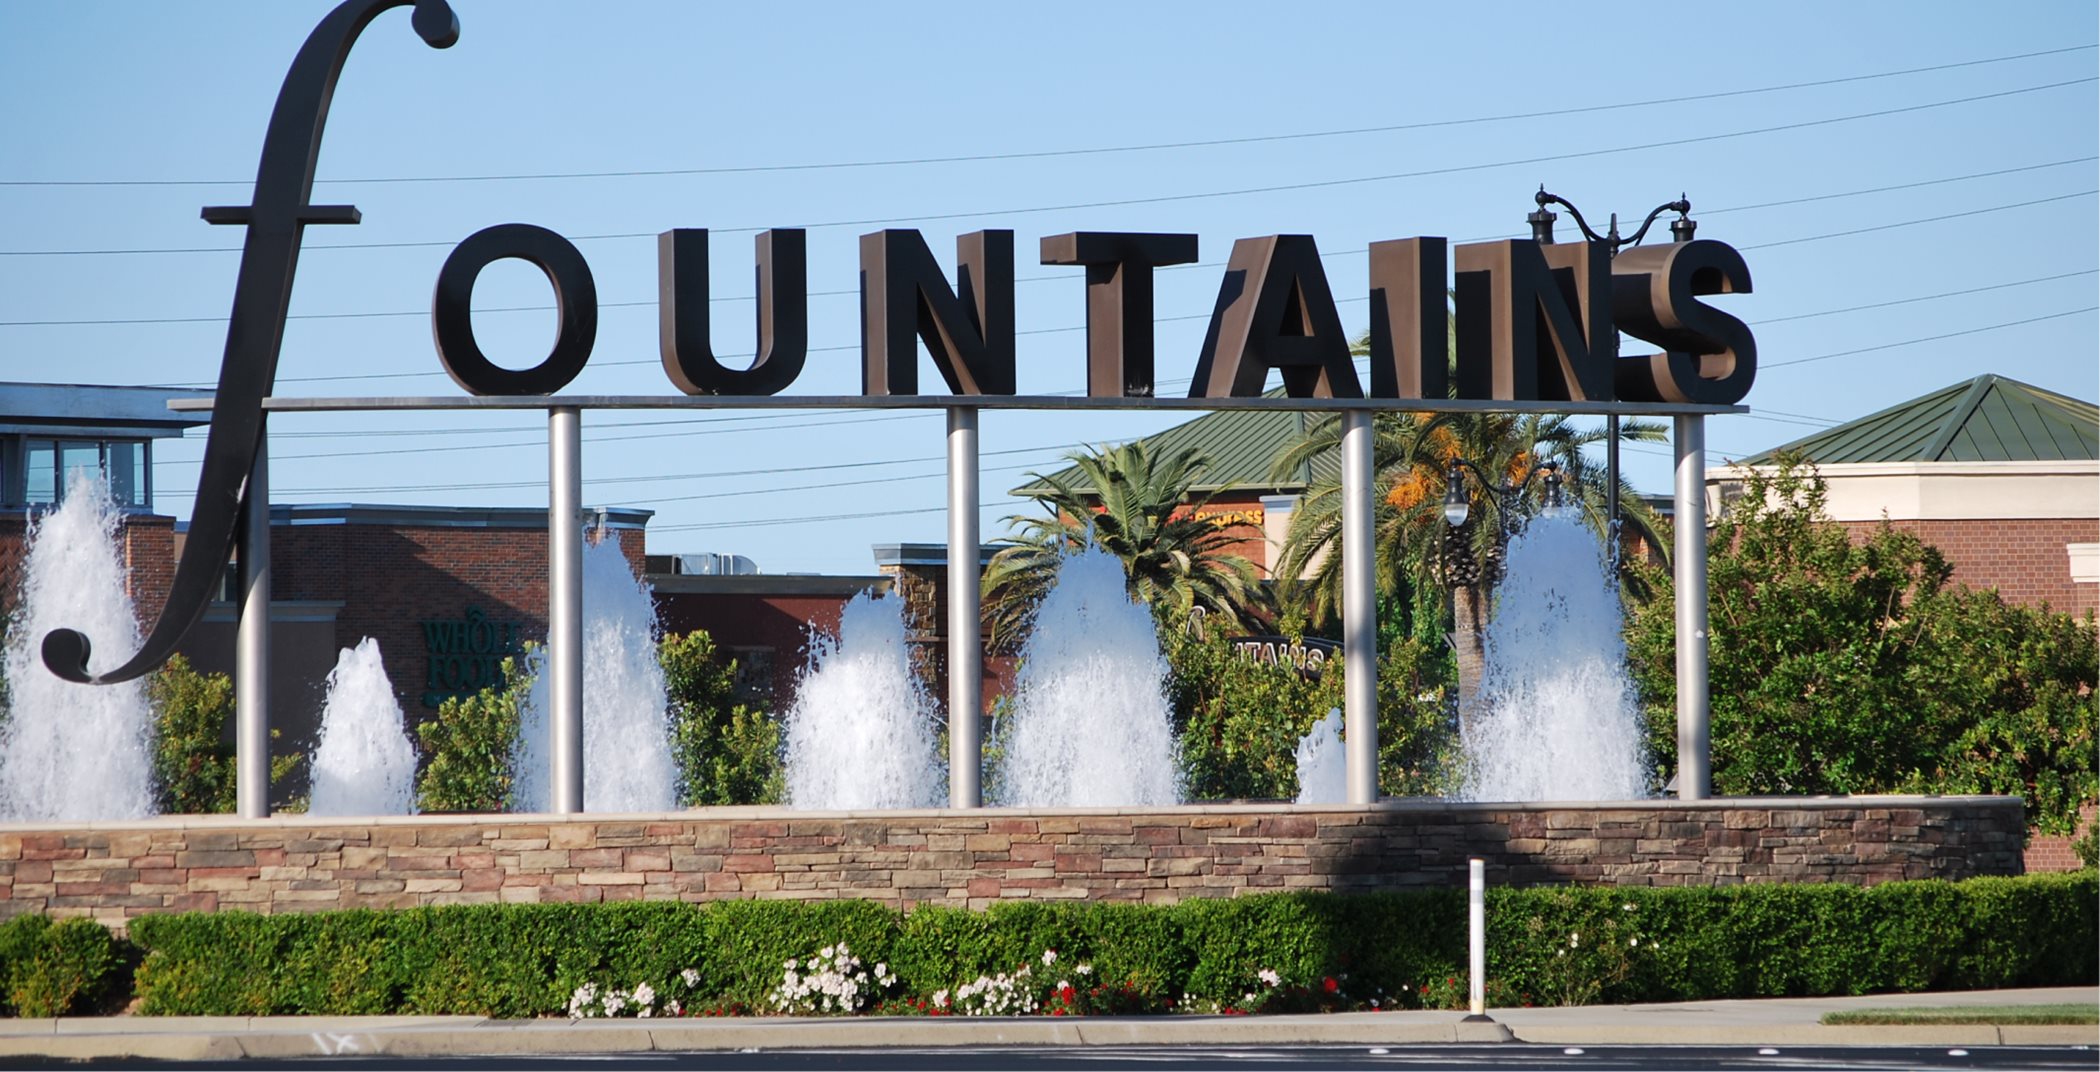 Fountains mall